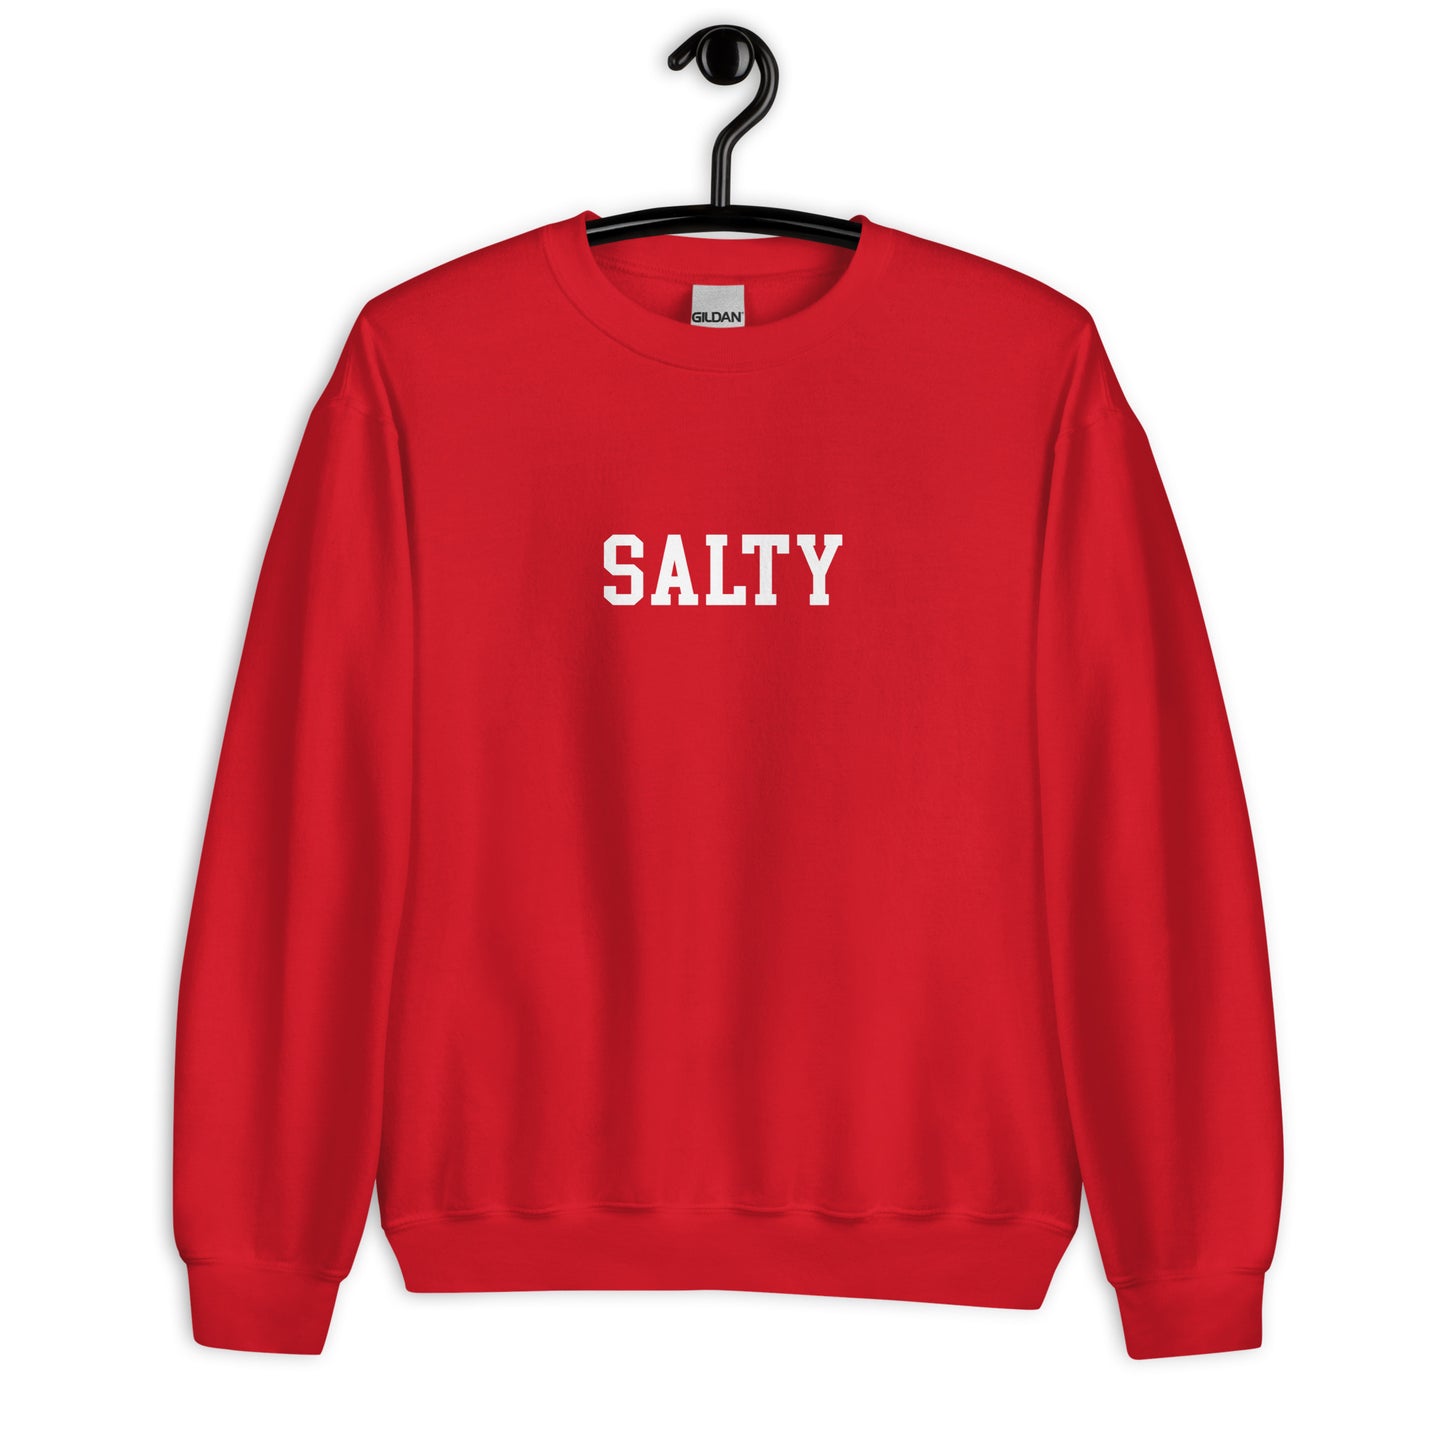 Salty Sweatshirt - Straight Font